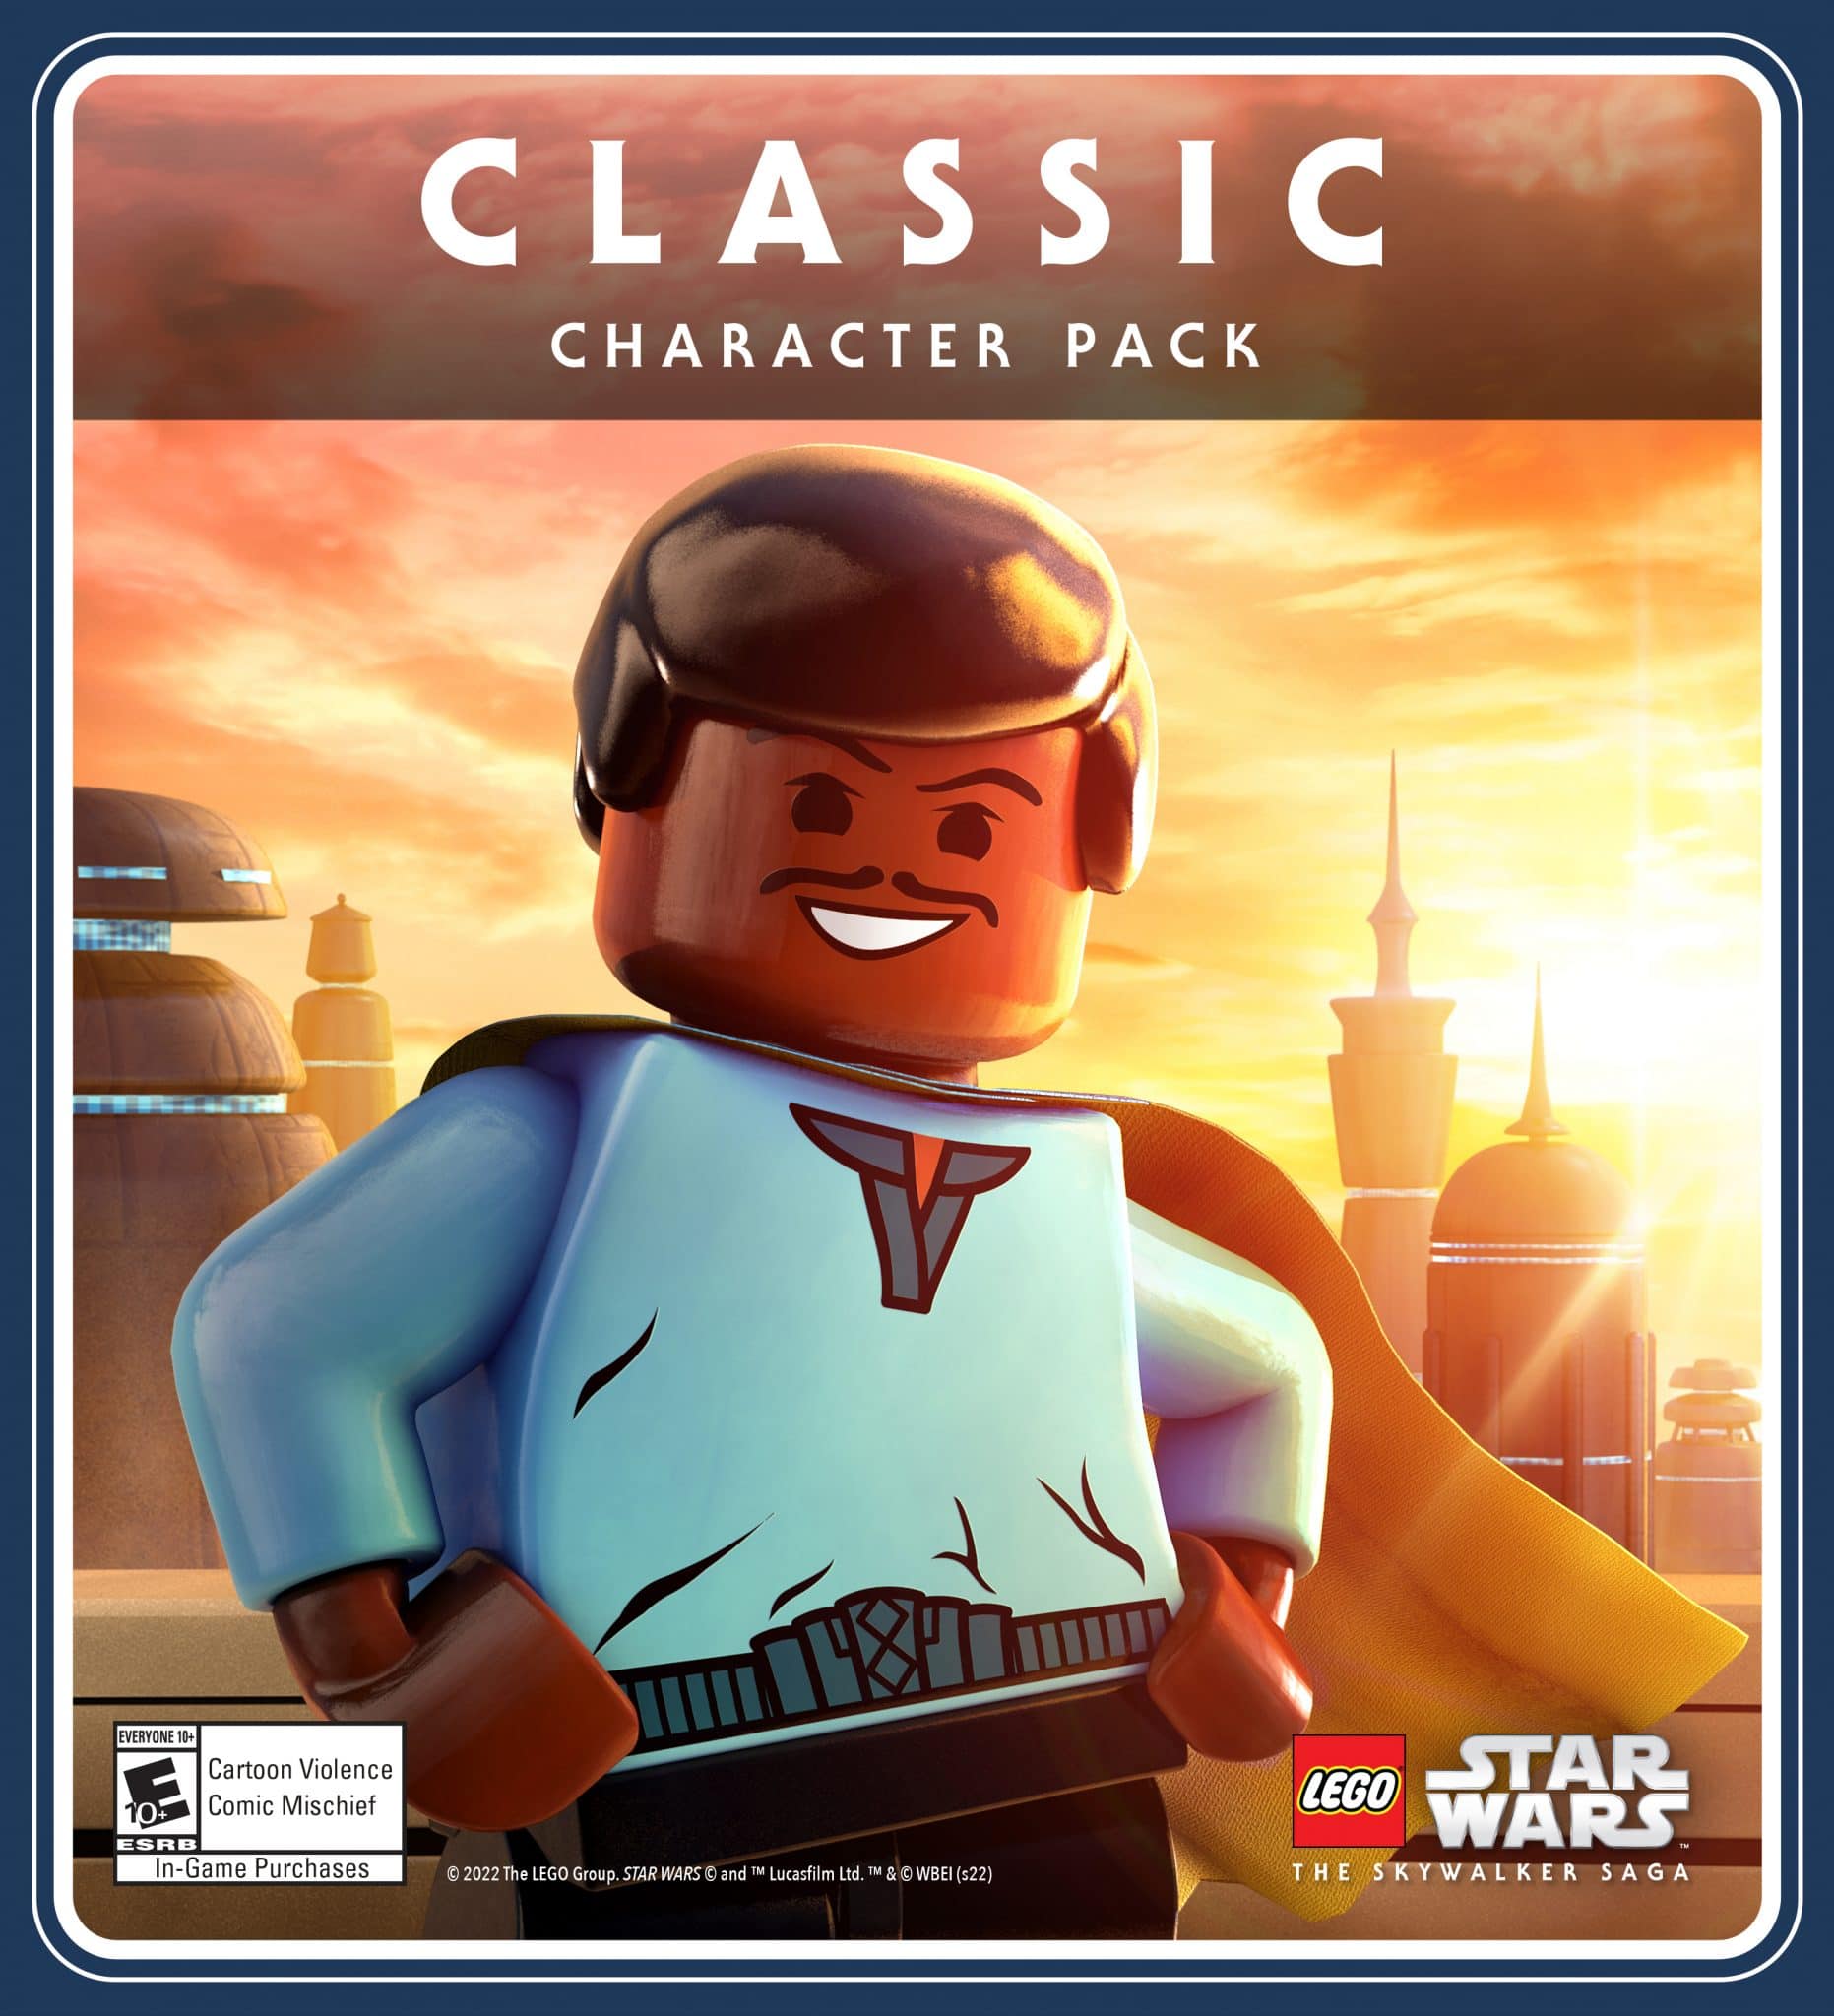 LEGO Star Wars: The Skywalker Saga Goes Into Season Pass Details